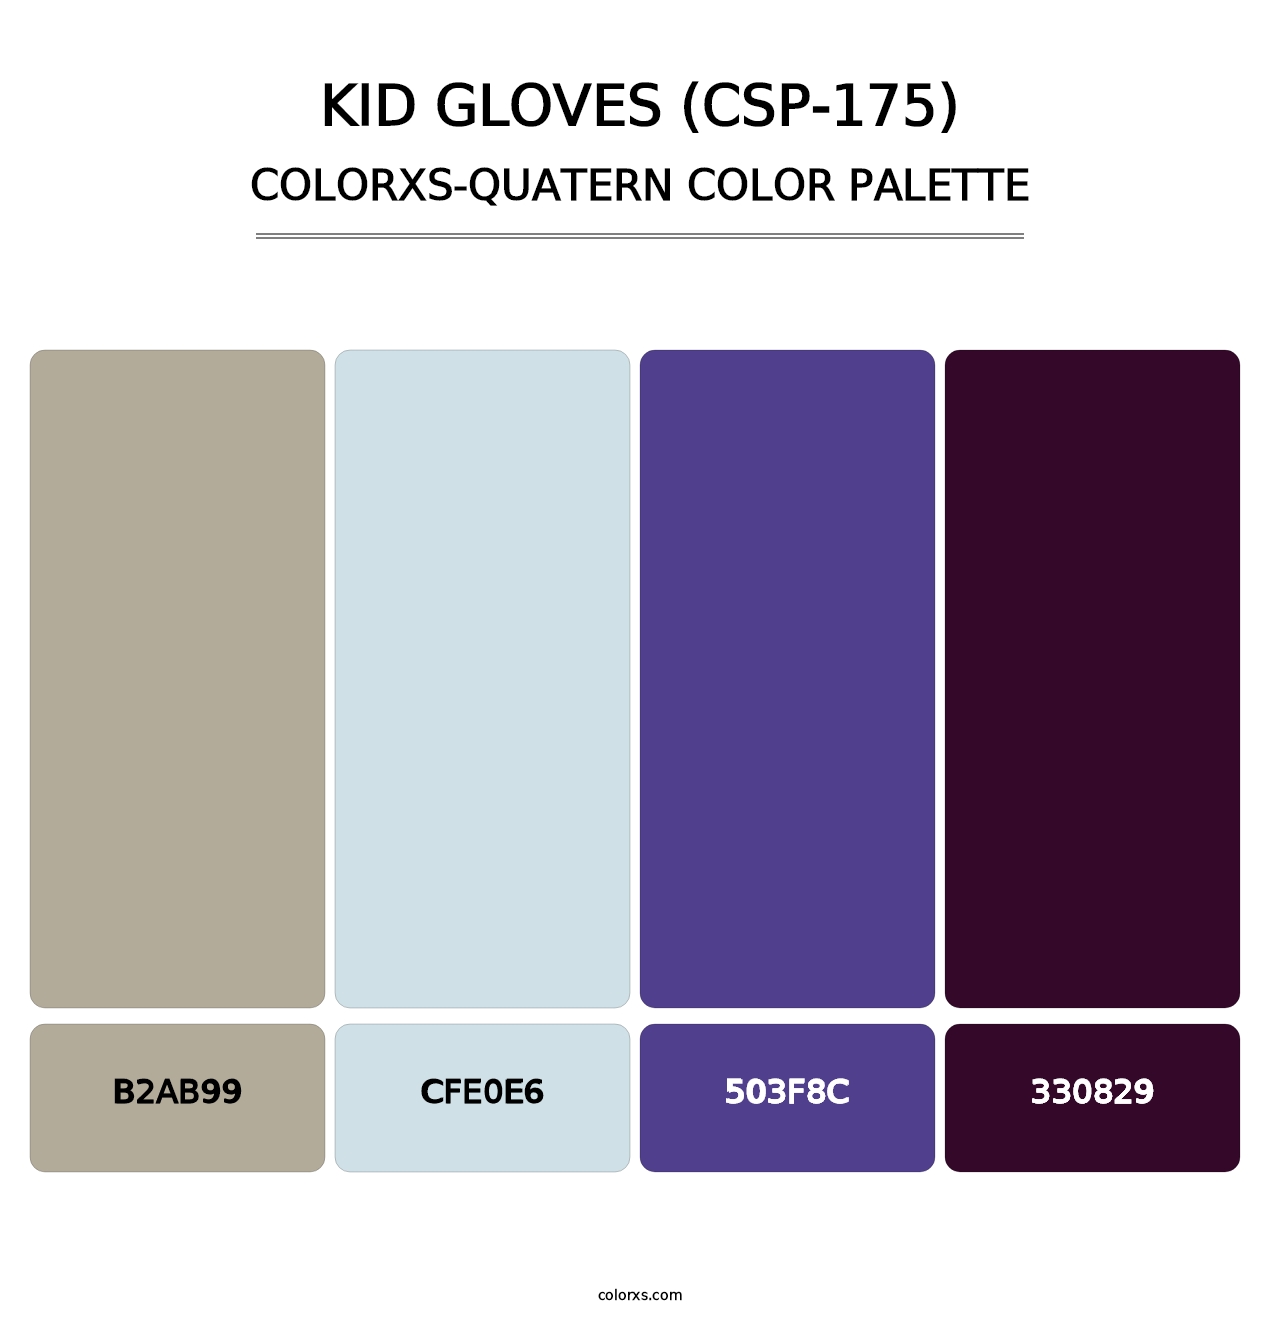 Kid Gloves (CSP-175) - Colorxs Quatern Palette